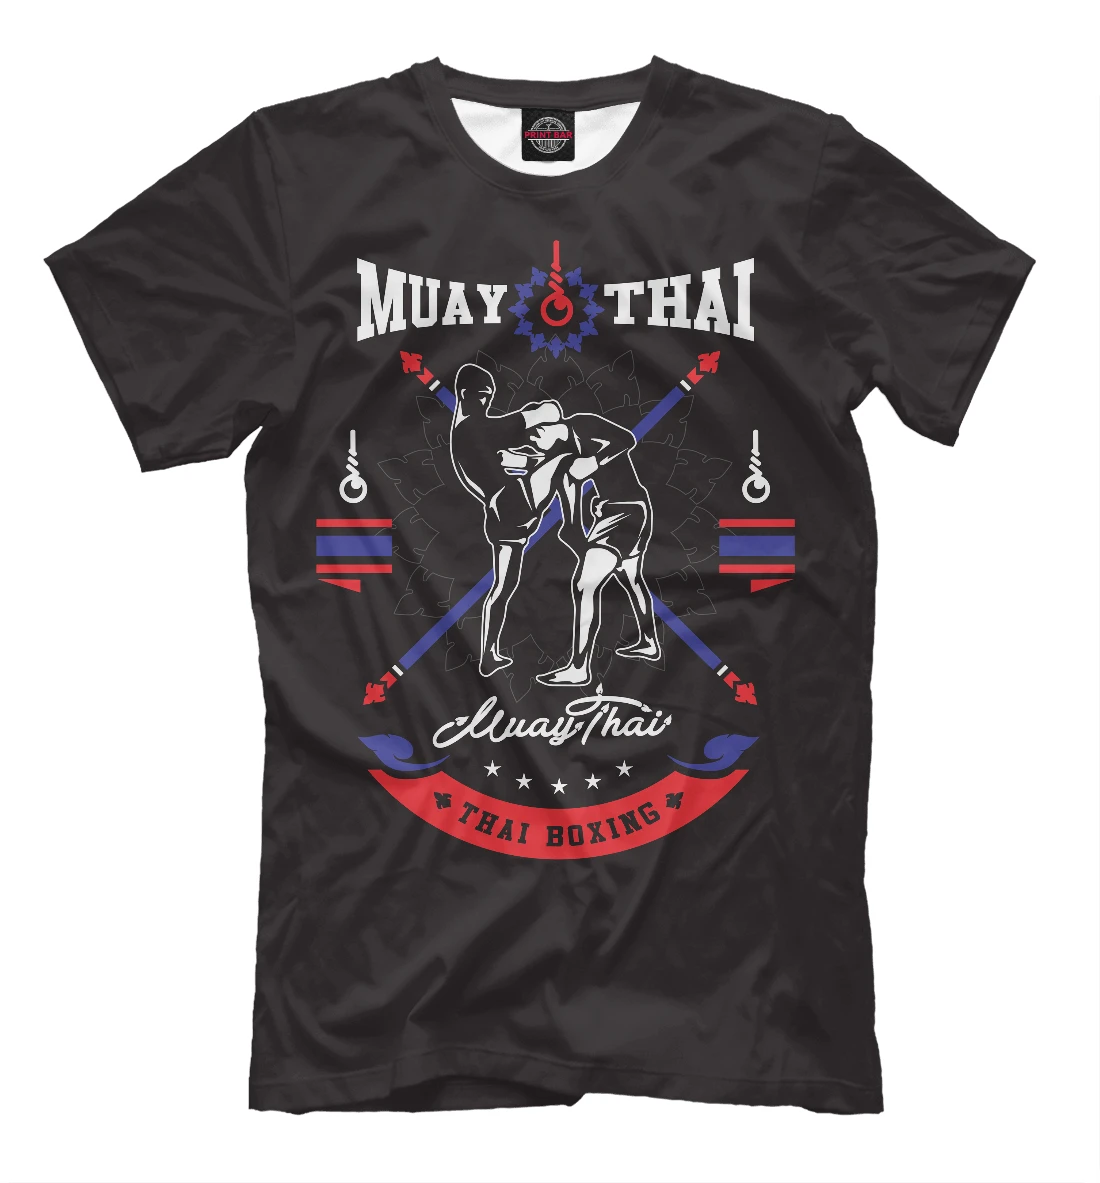 Summer Men's Muay thai T Shirt Sports Running T Shirt Men's Gym Fitness Combat Training Shirts  Sportswear Boxing Quick Dry